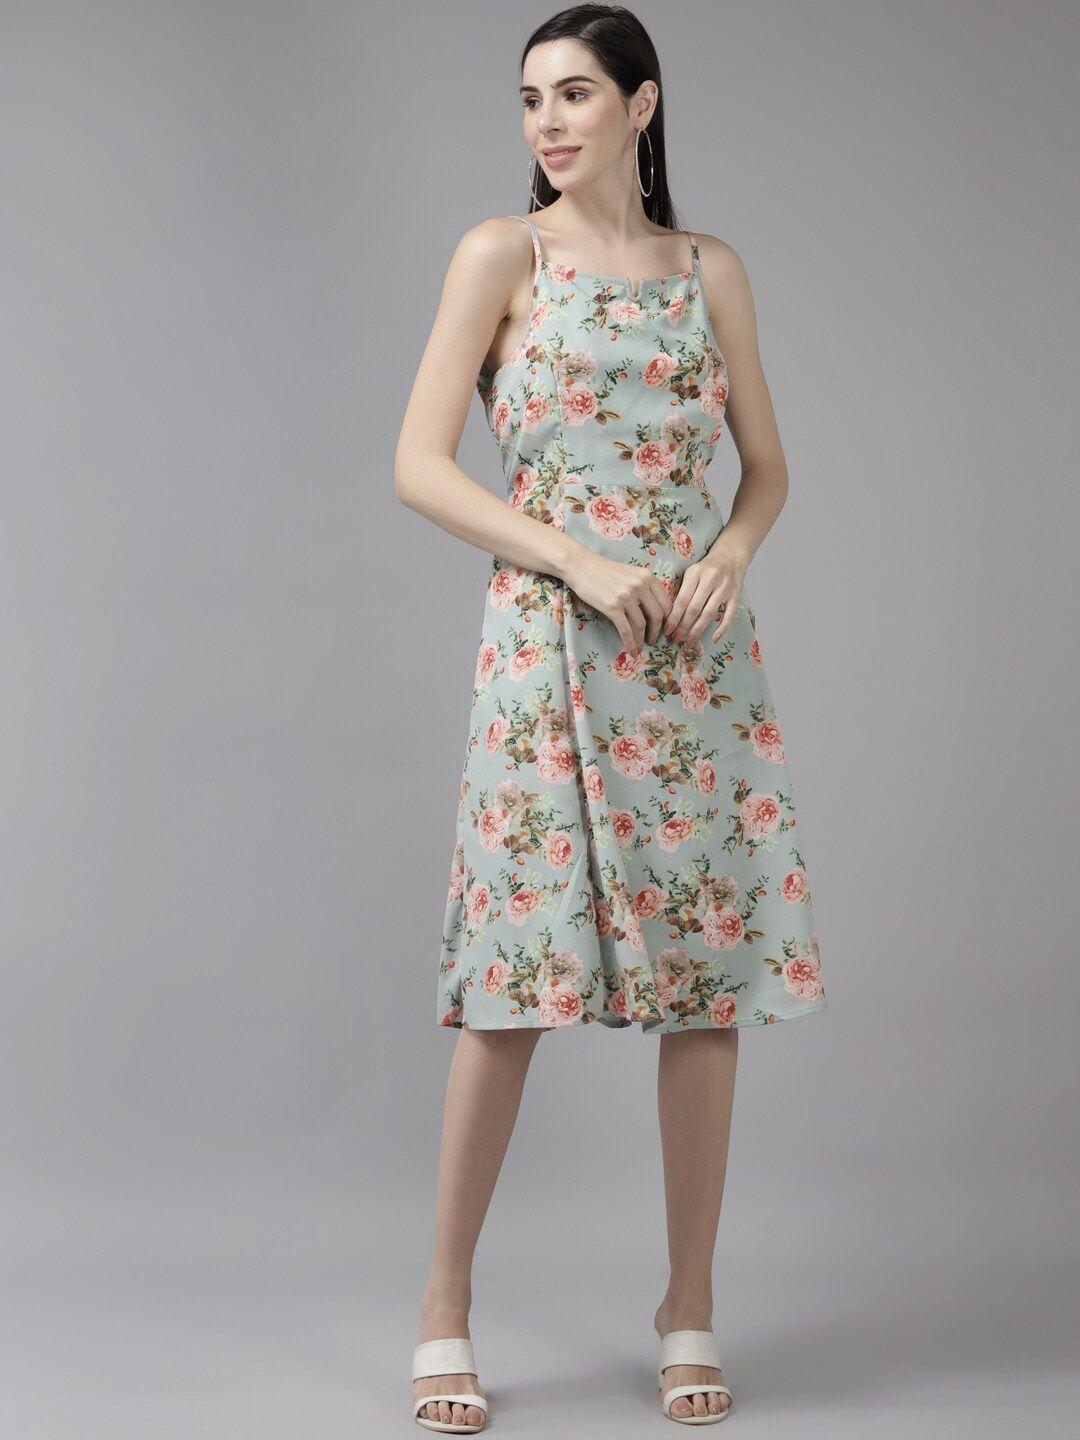 aarika floral printed shoulder straps midi dress